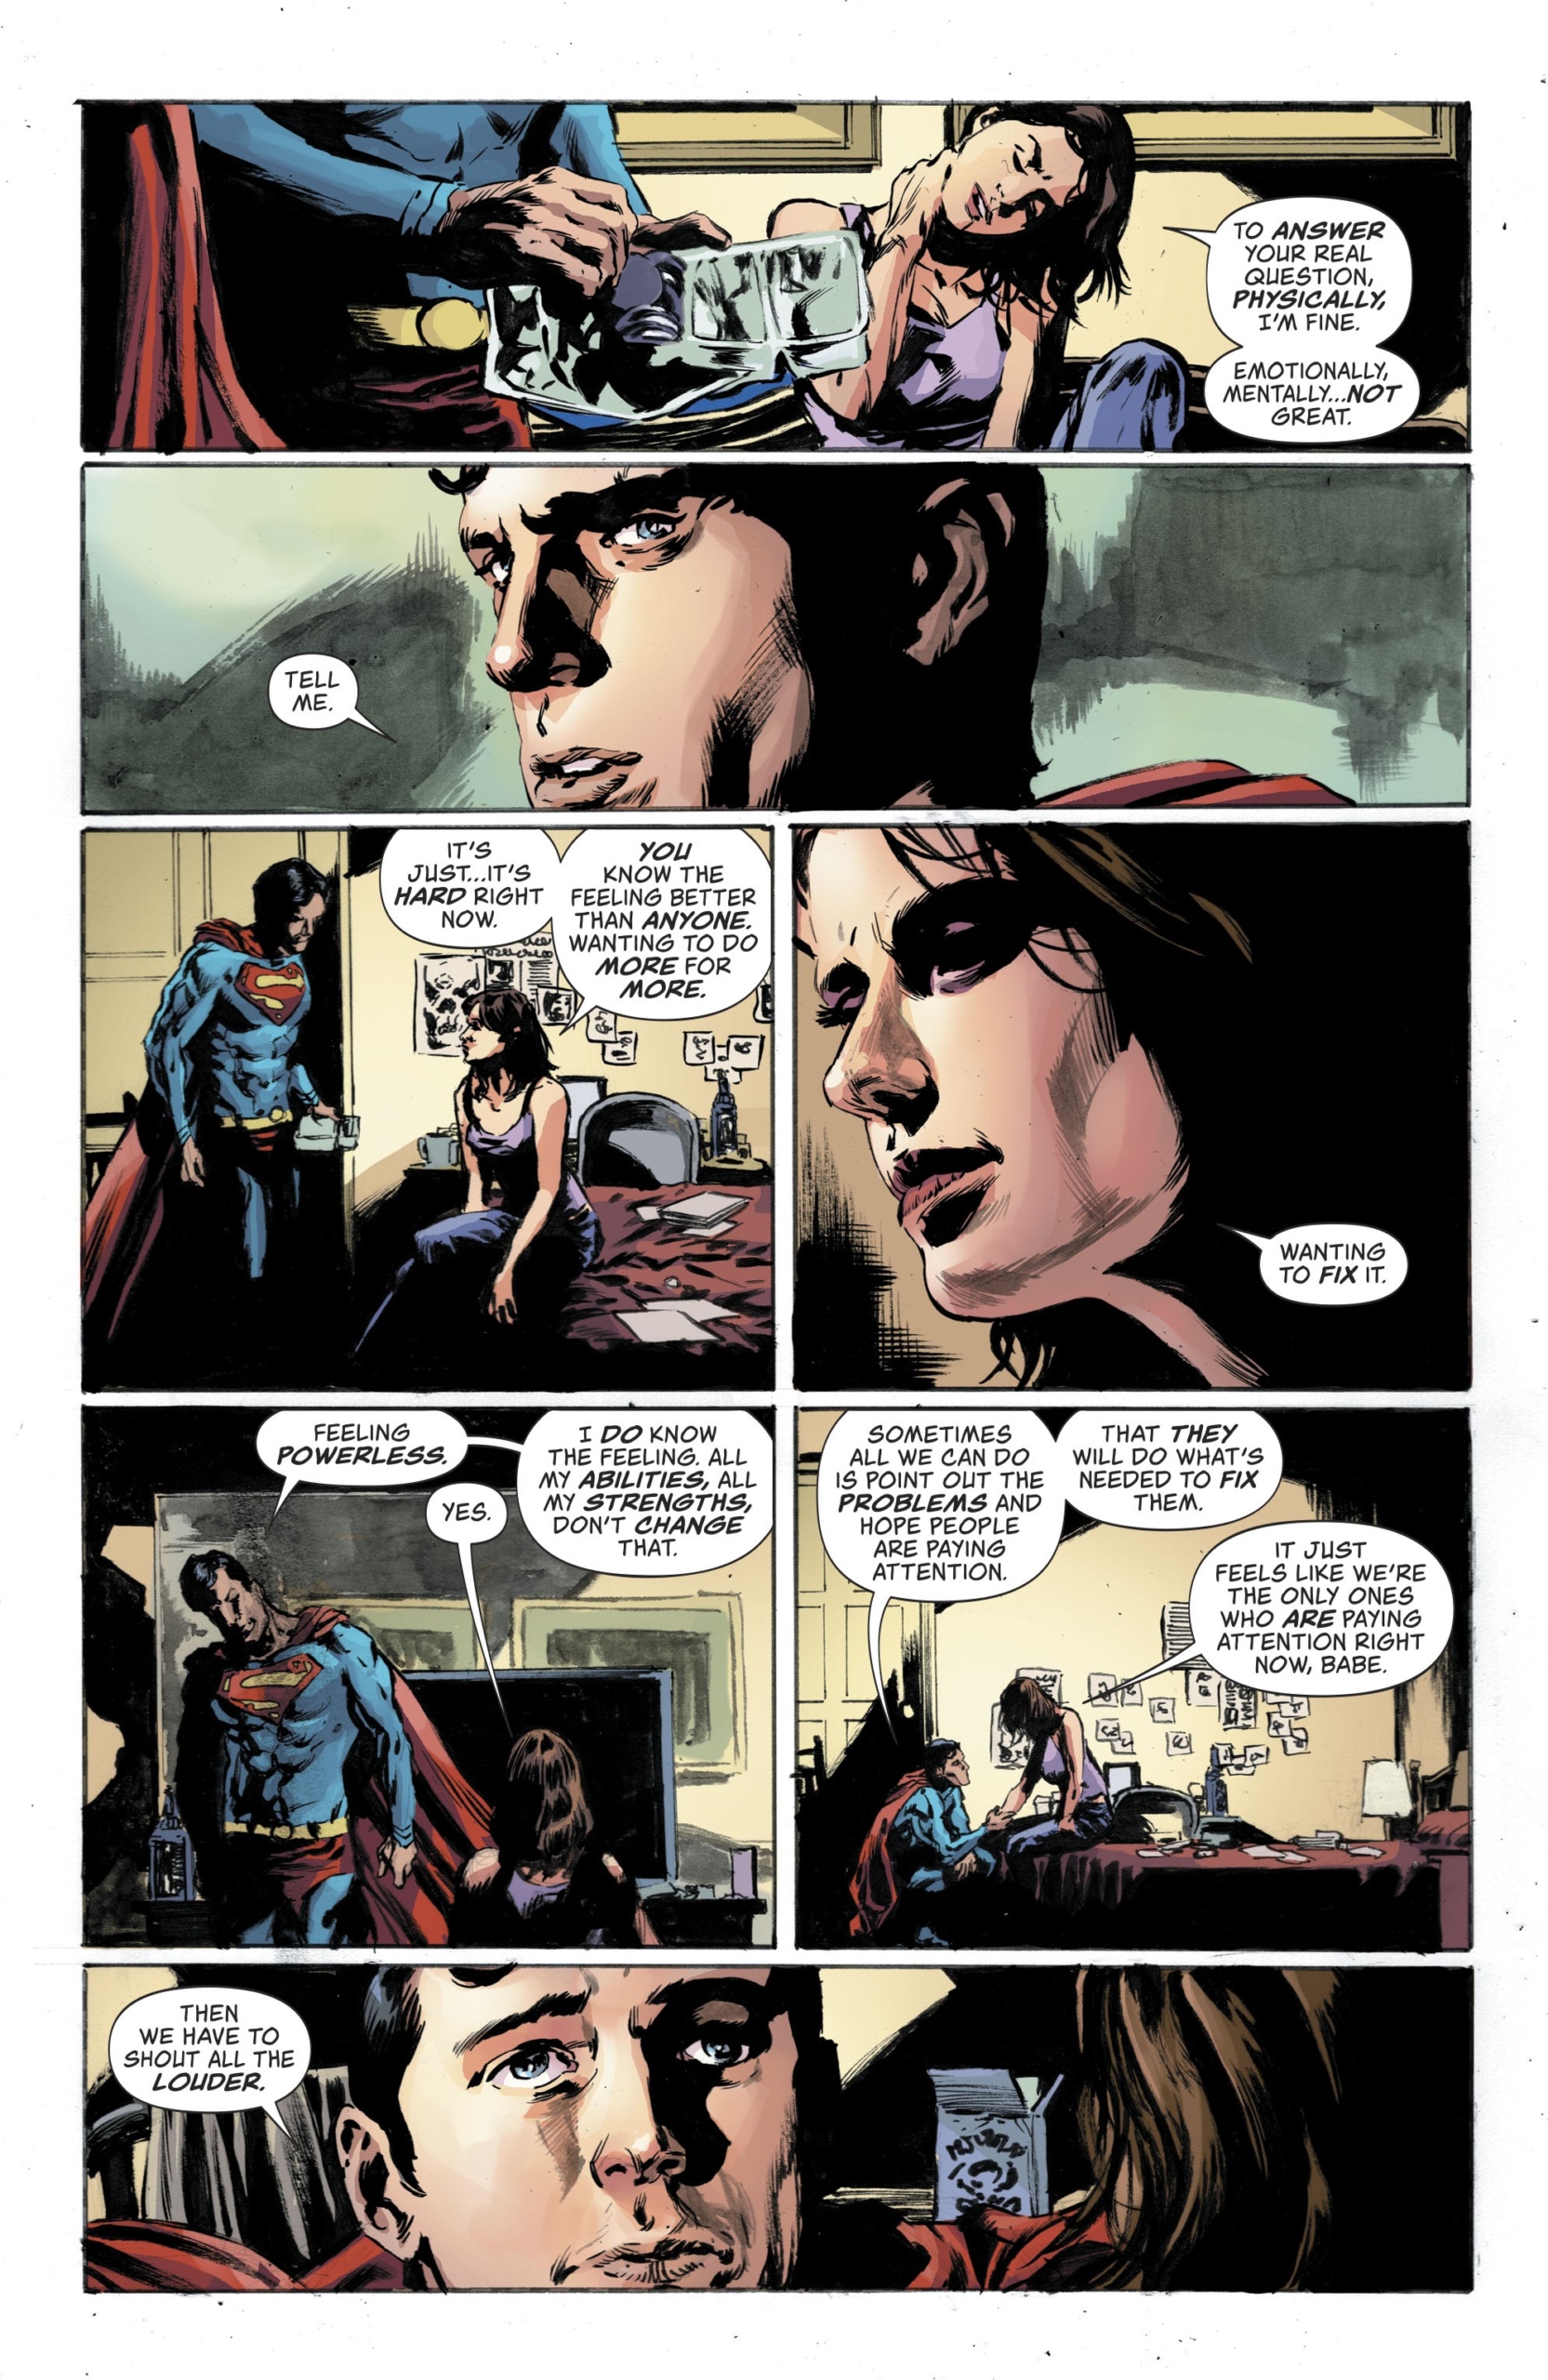 Superman and Lois talk